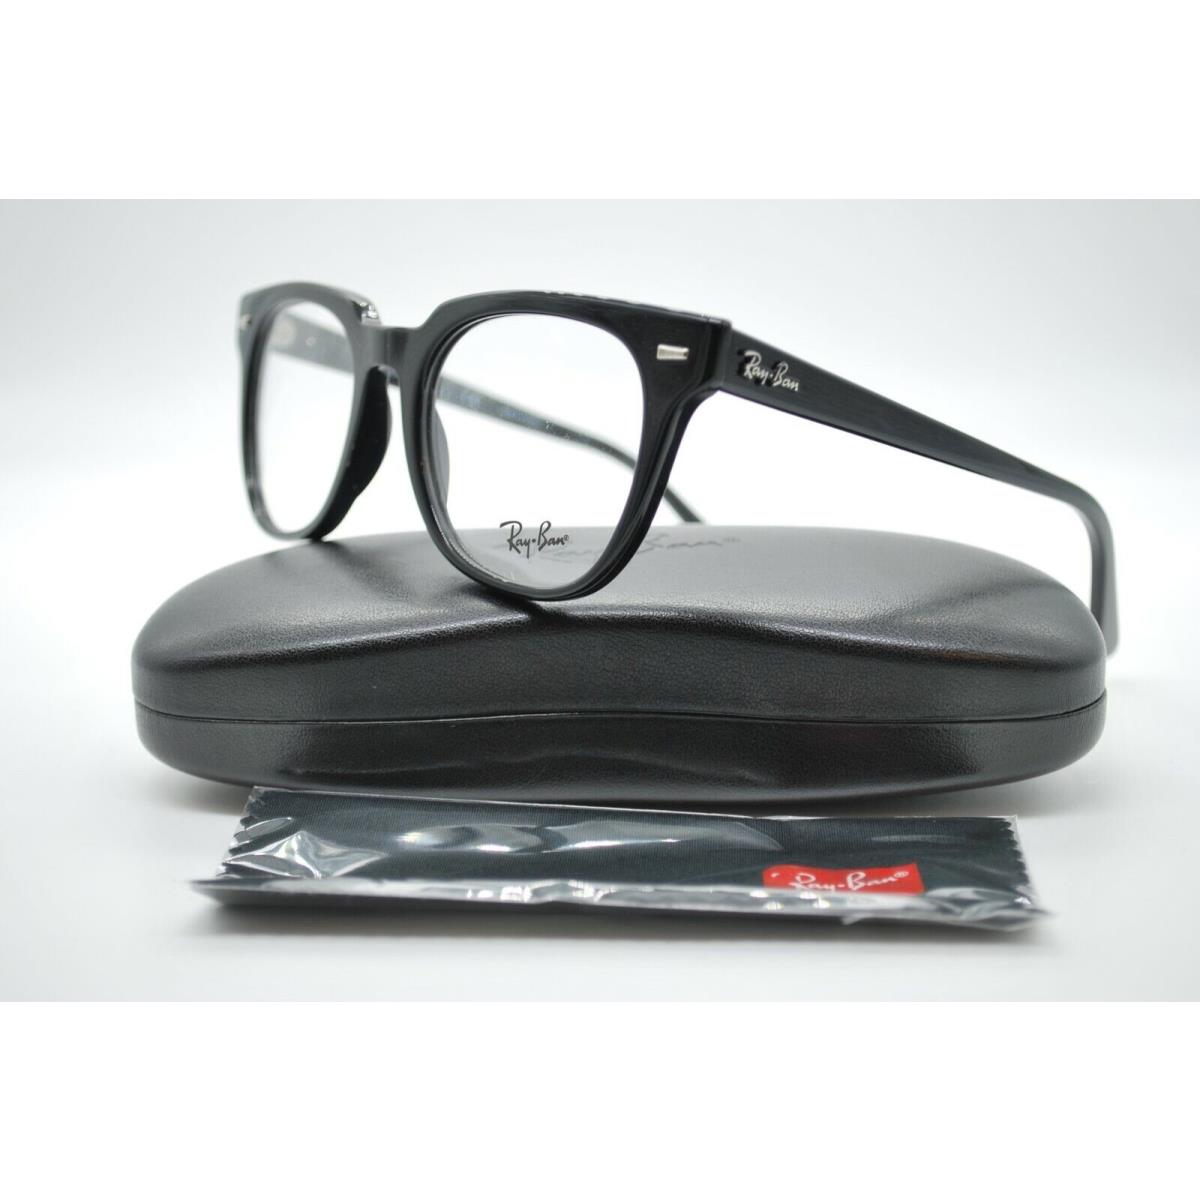 labyrinth salute Chalk Ray-ban Ray Ban RB 5377 2000 Black Eyeglasses Frames RX 52-20 |  017850863266 - Ray-Ban eyeglasses - Black Frame | Fash Direct